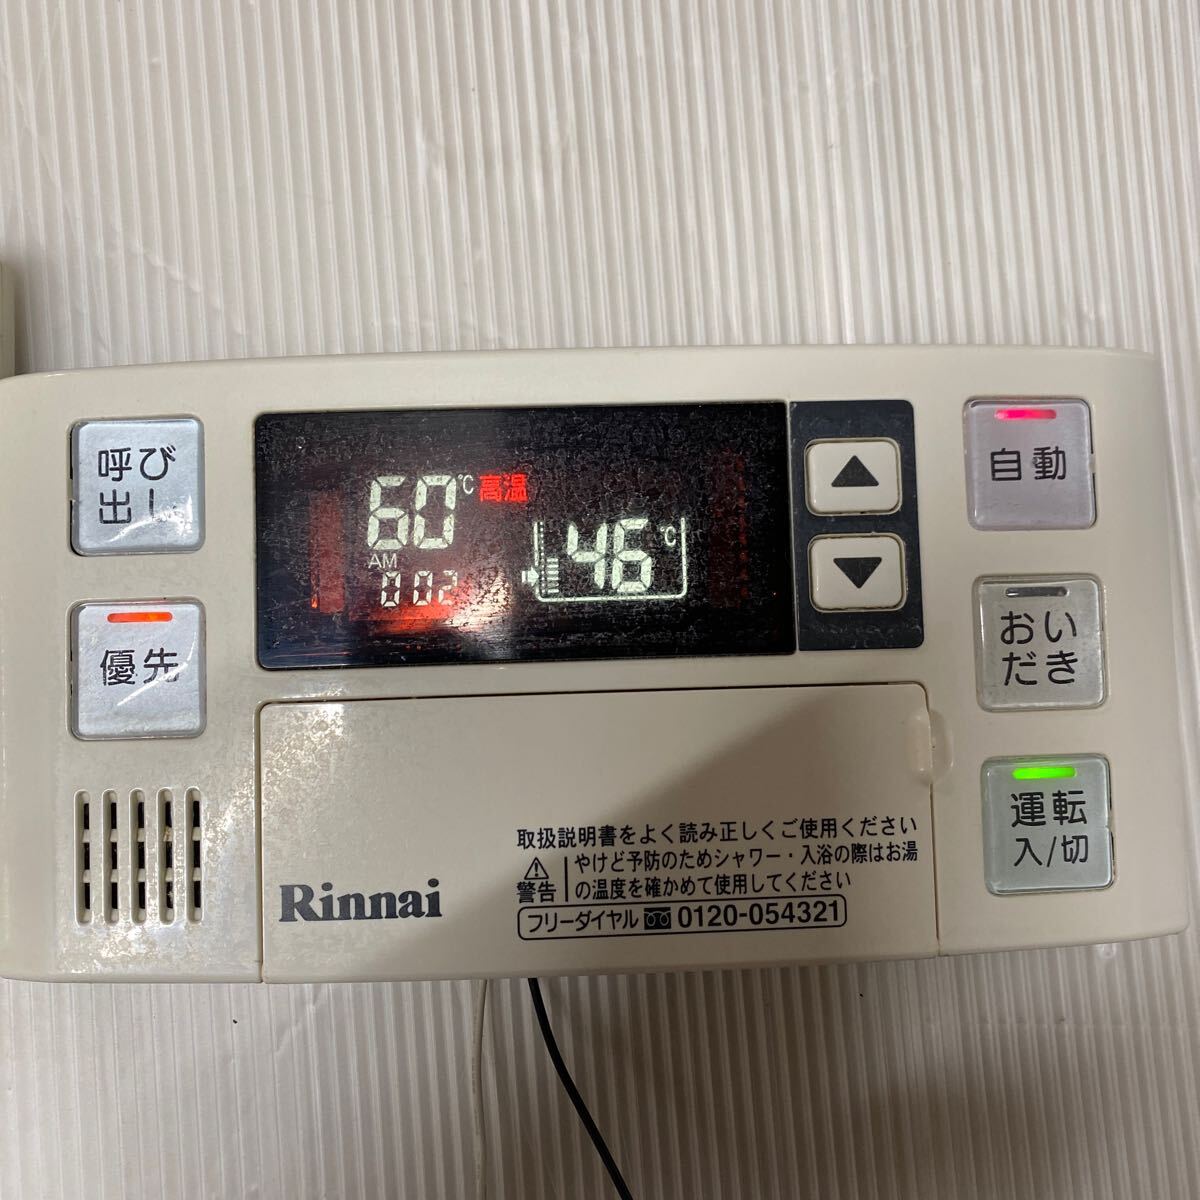  Rinnai water heater remote control BC-120V MC-120V set D